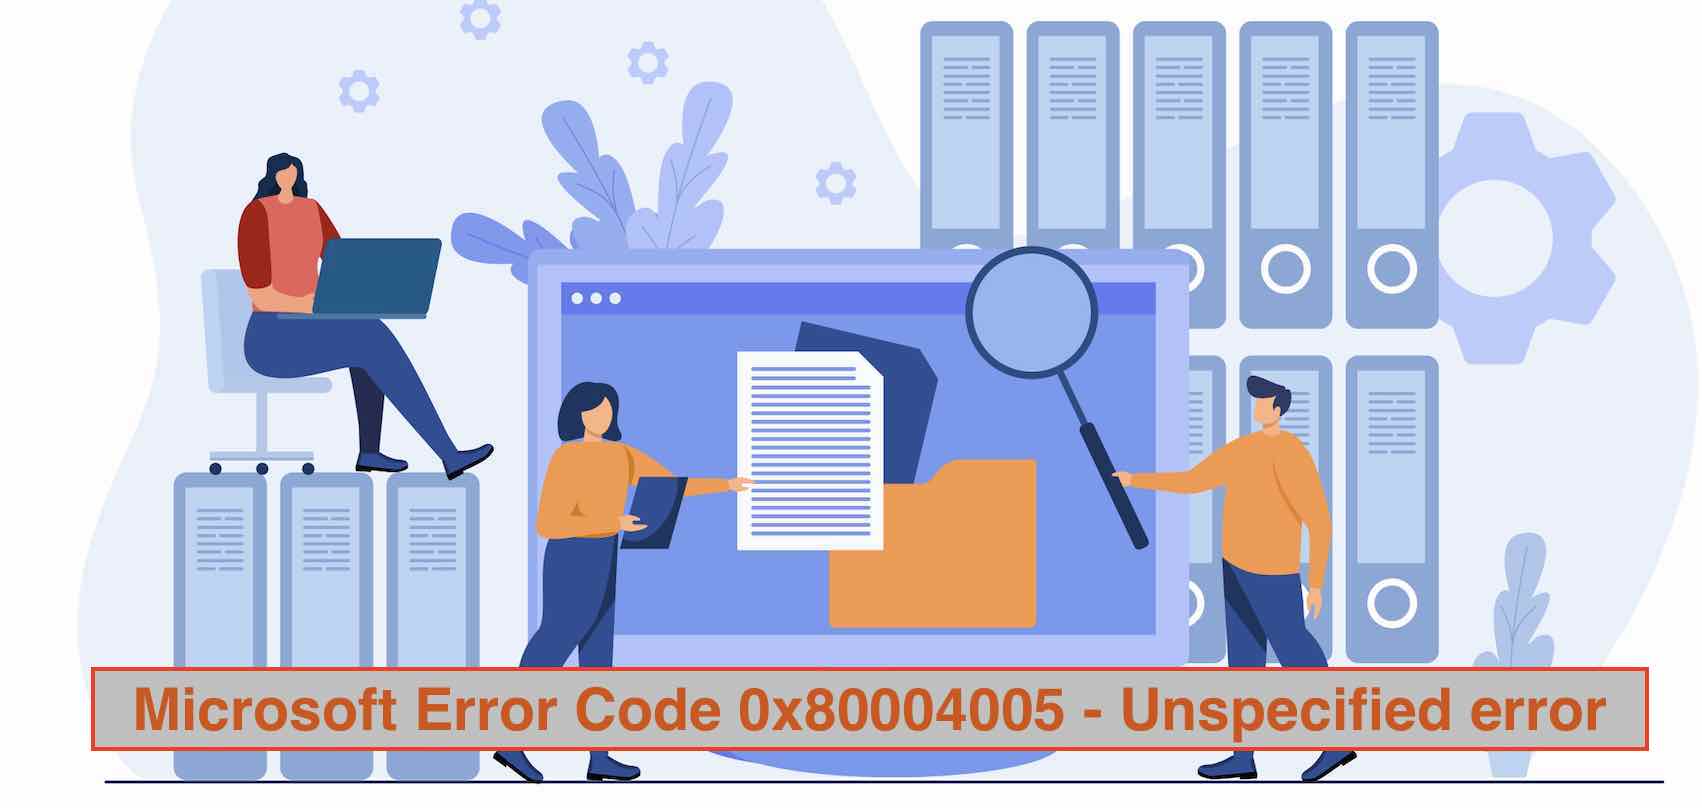 Fix - Microsoft Error Code 0x80004005 - Unspecified error.